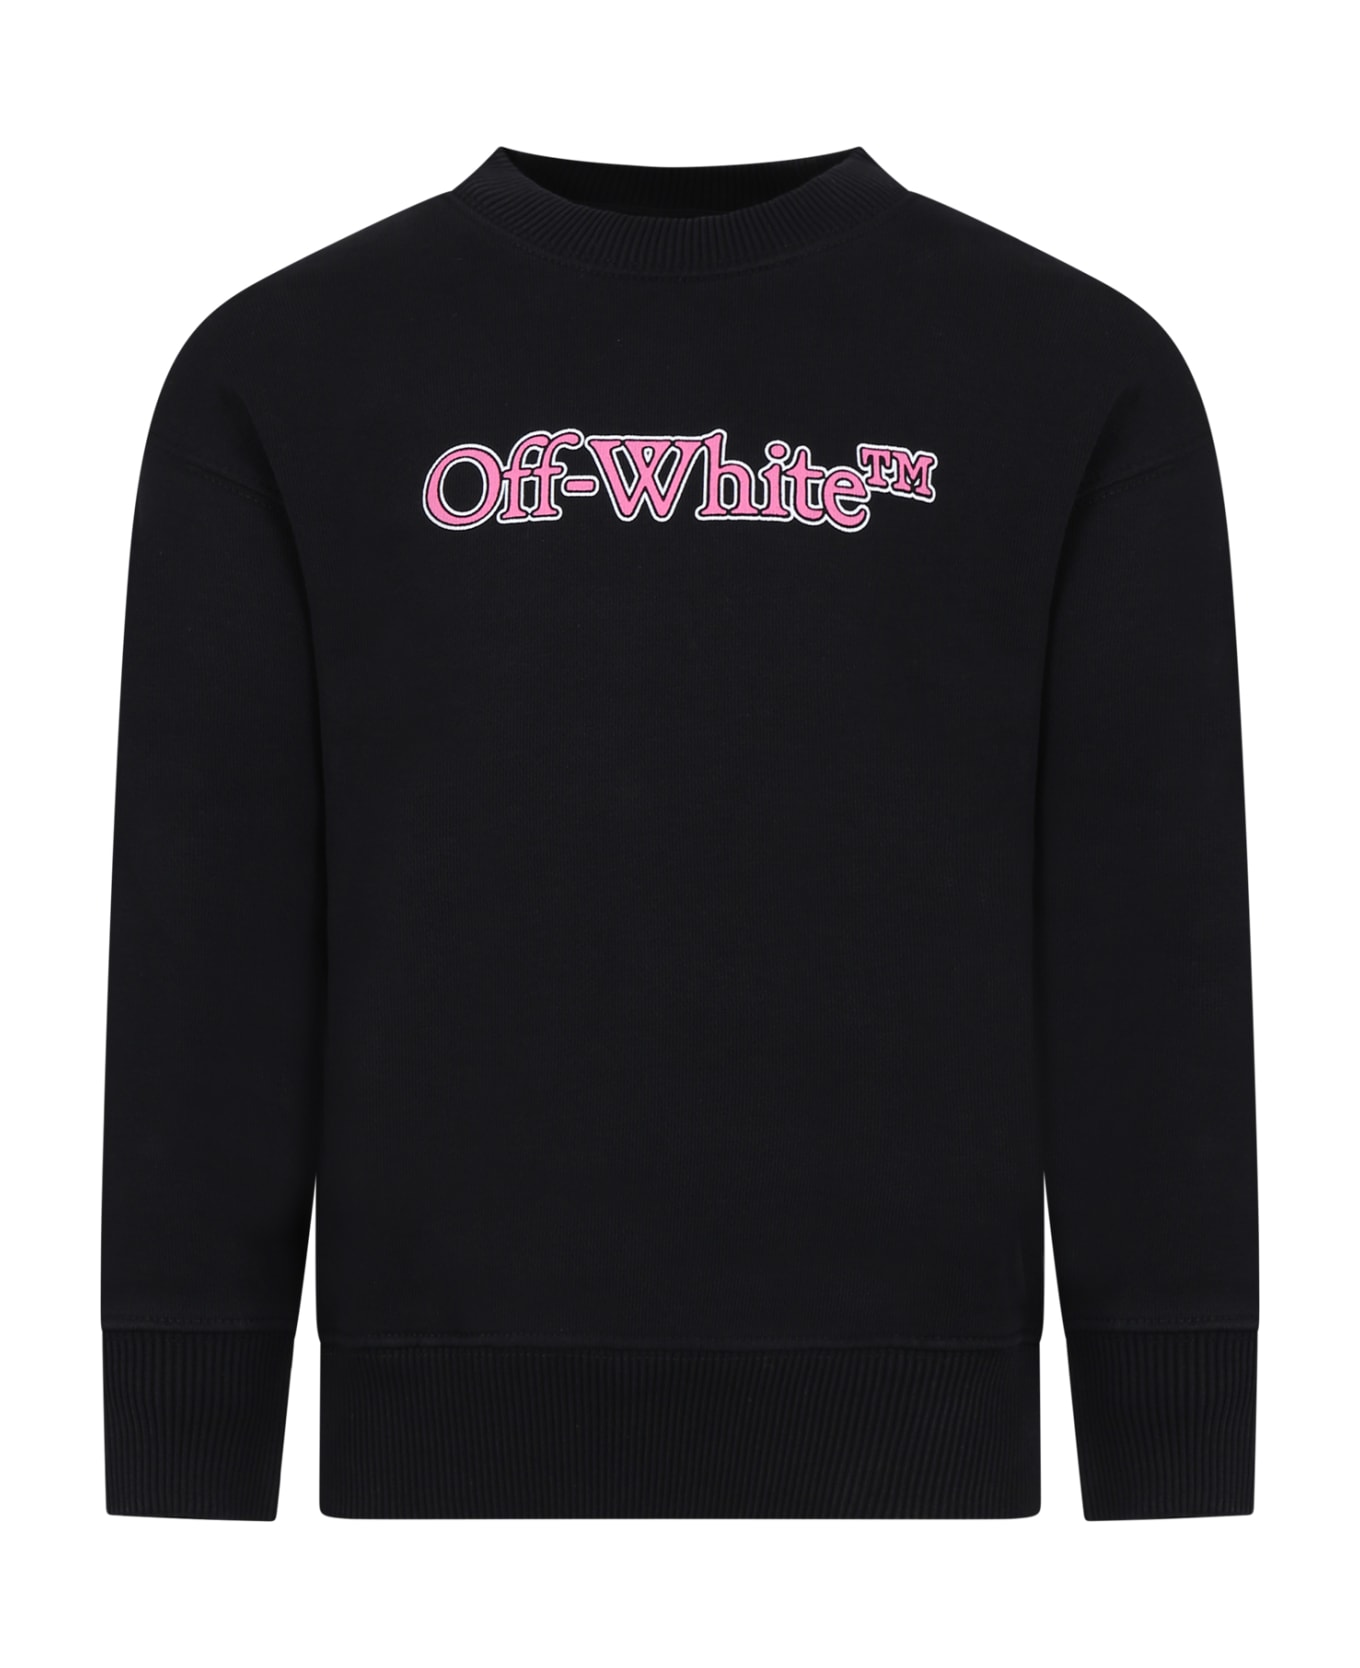 Off-White Black Sweatshirt For Girl With Logo - Black Fuch